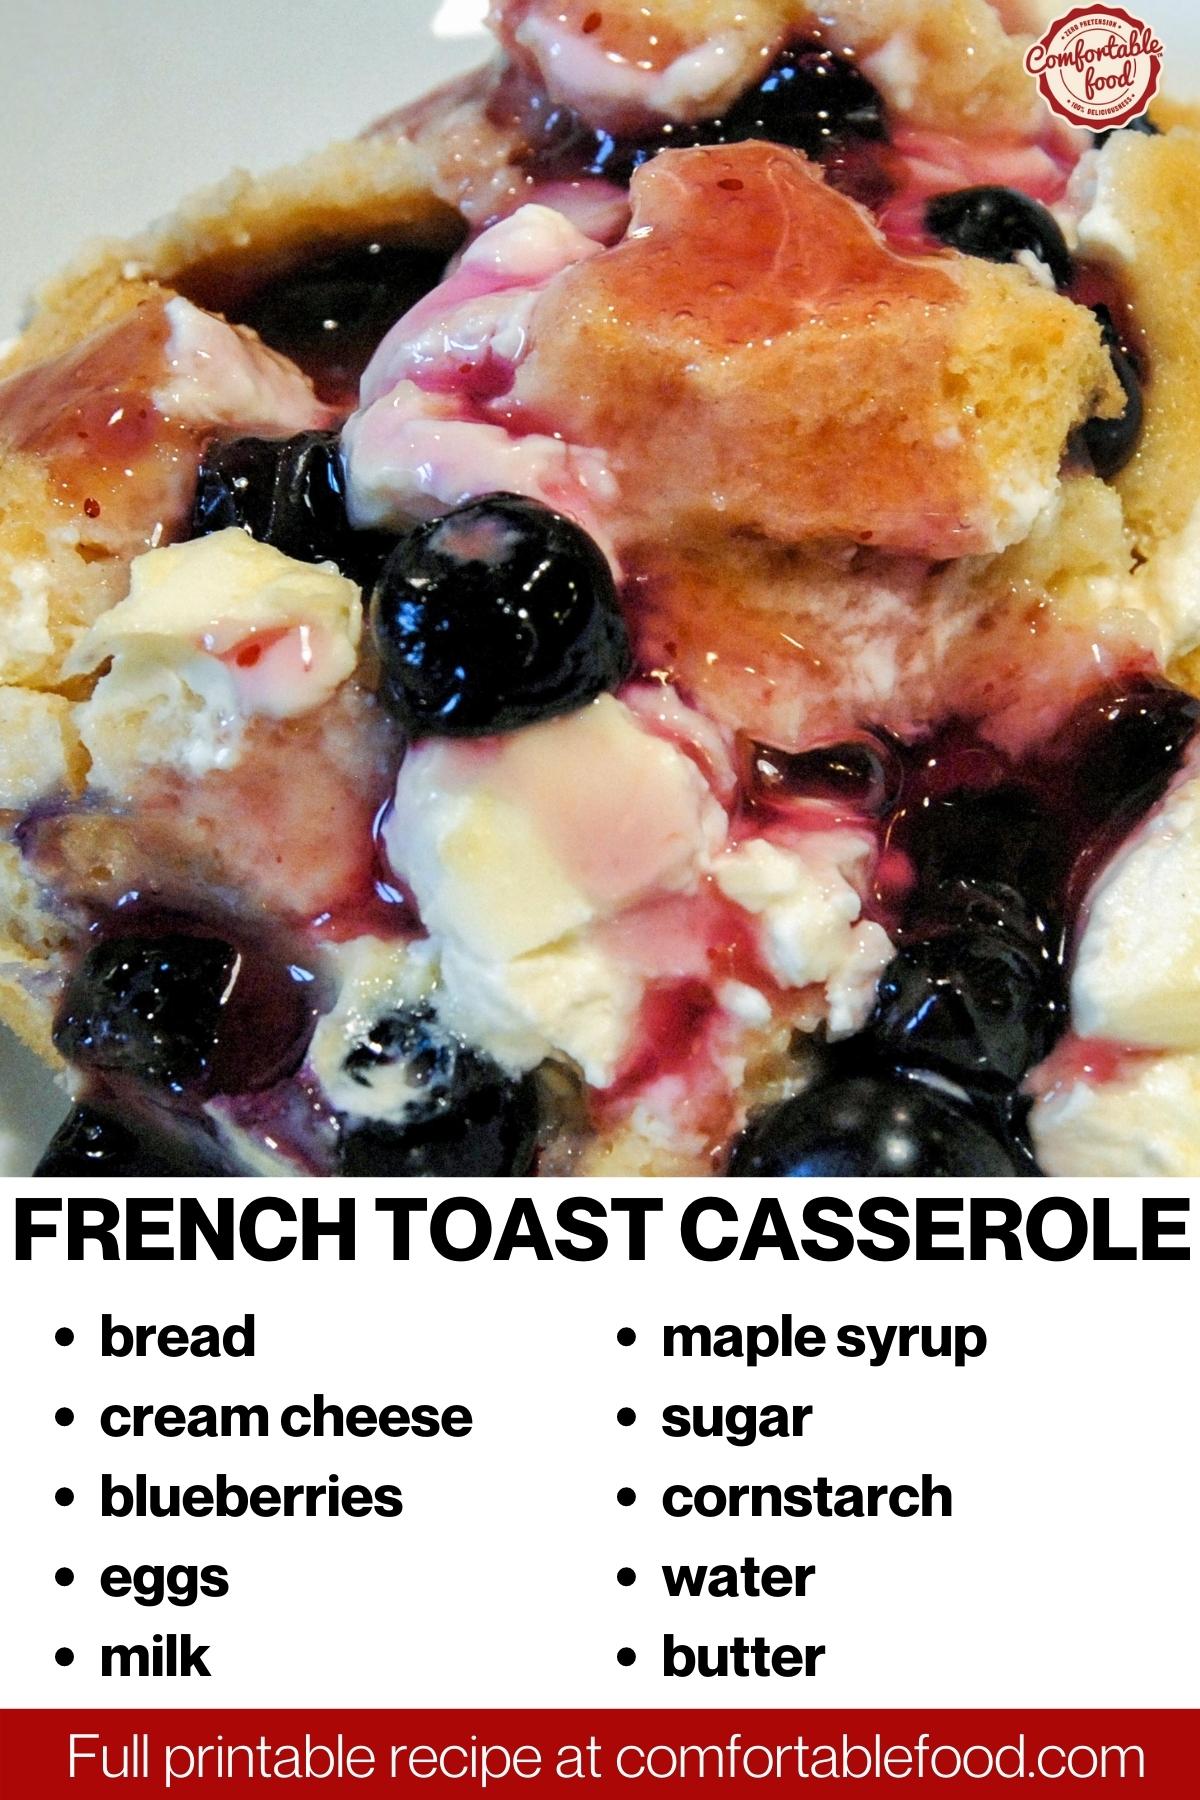 French toast casserole socials